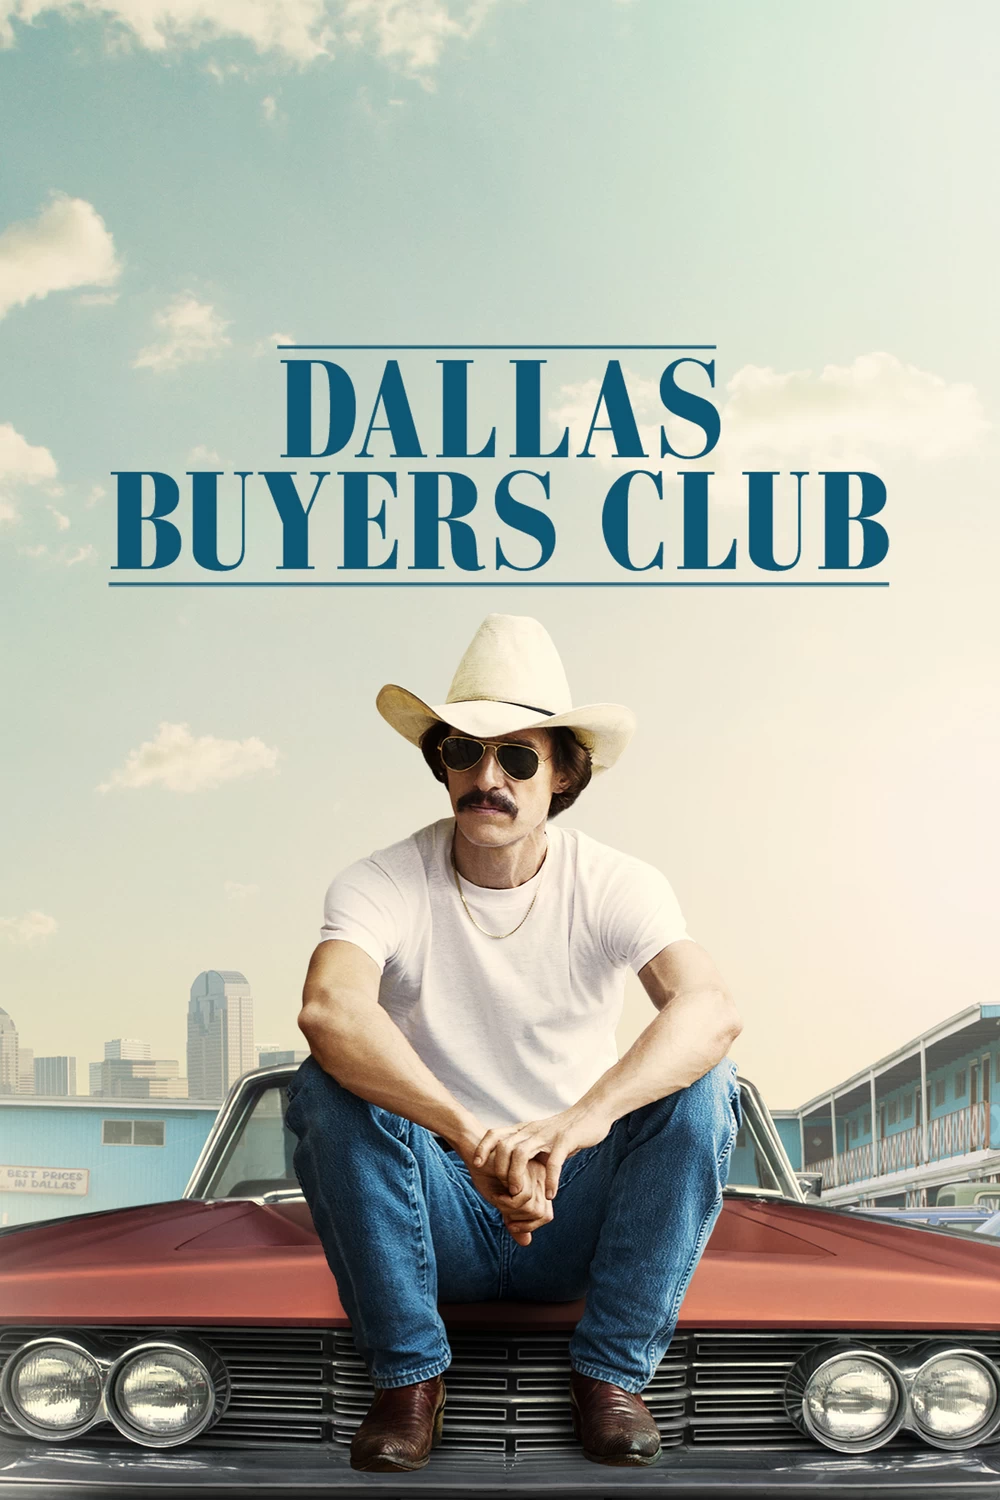 Dallas buyers club parent guide